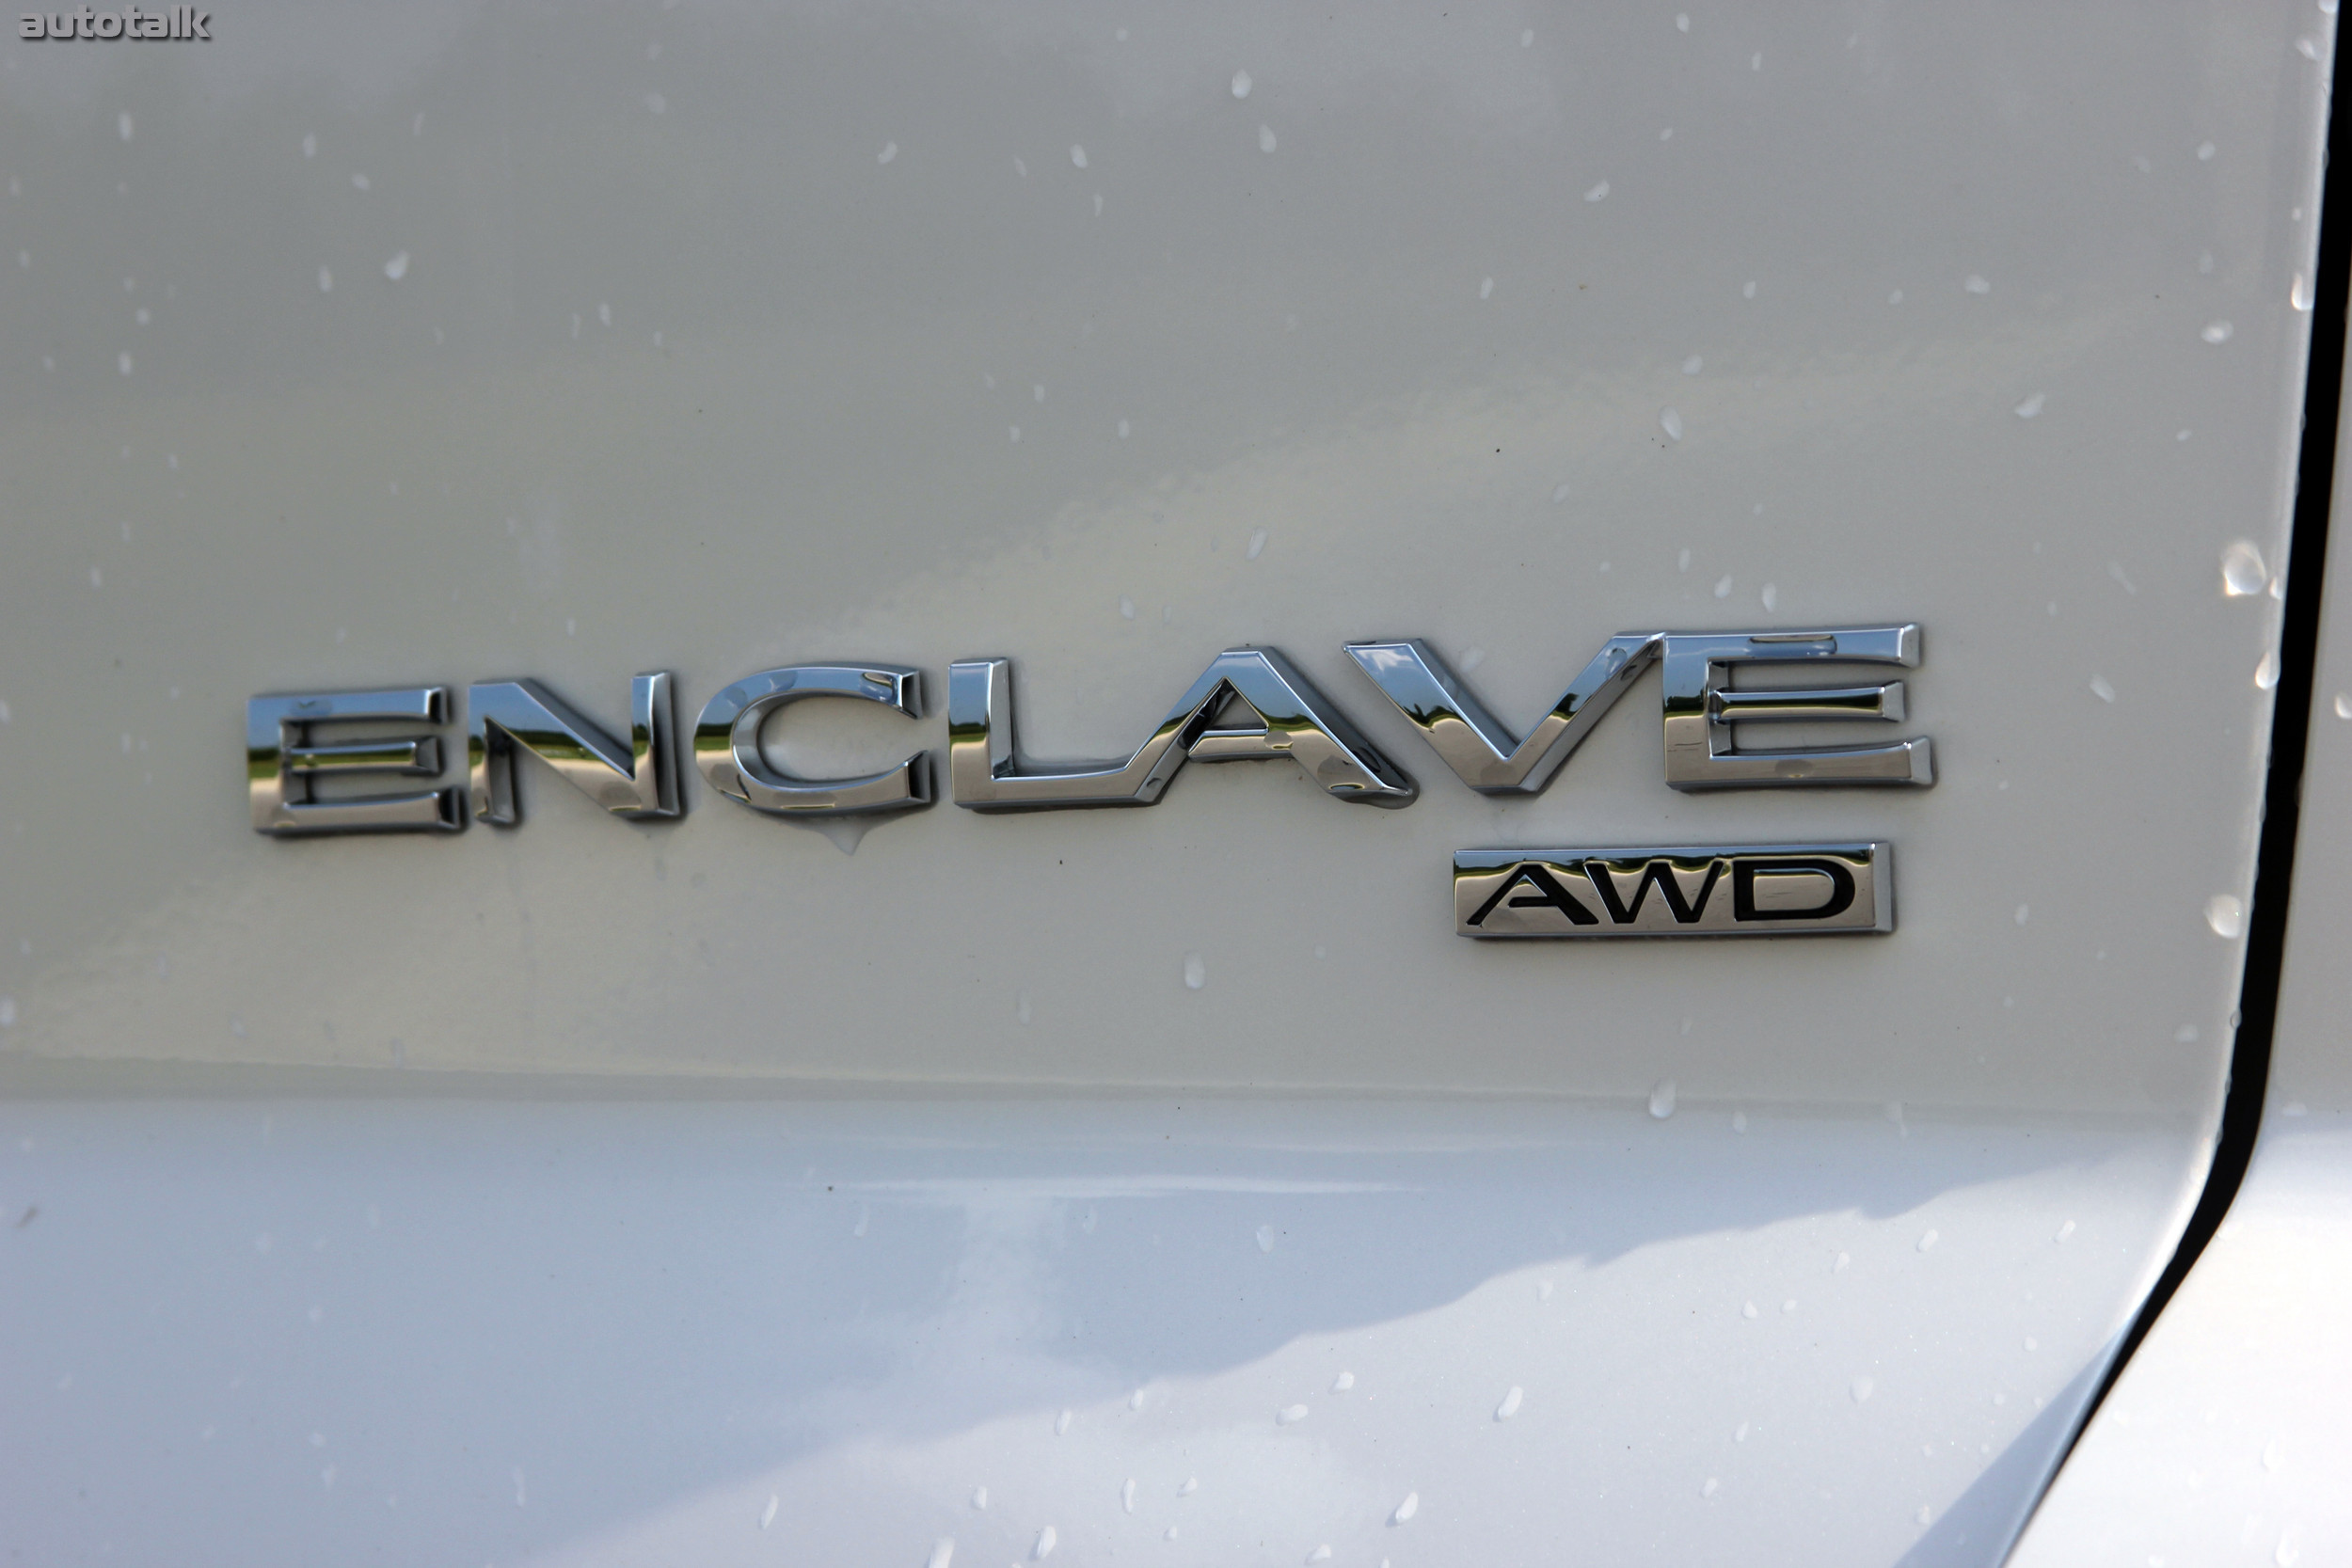 2012 Buick Enclave Review